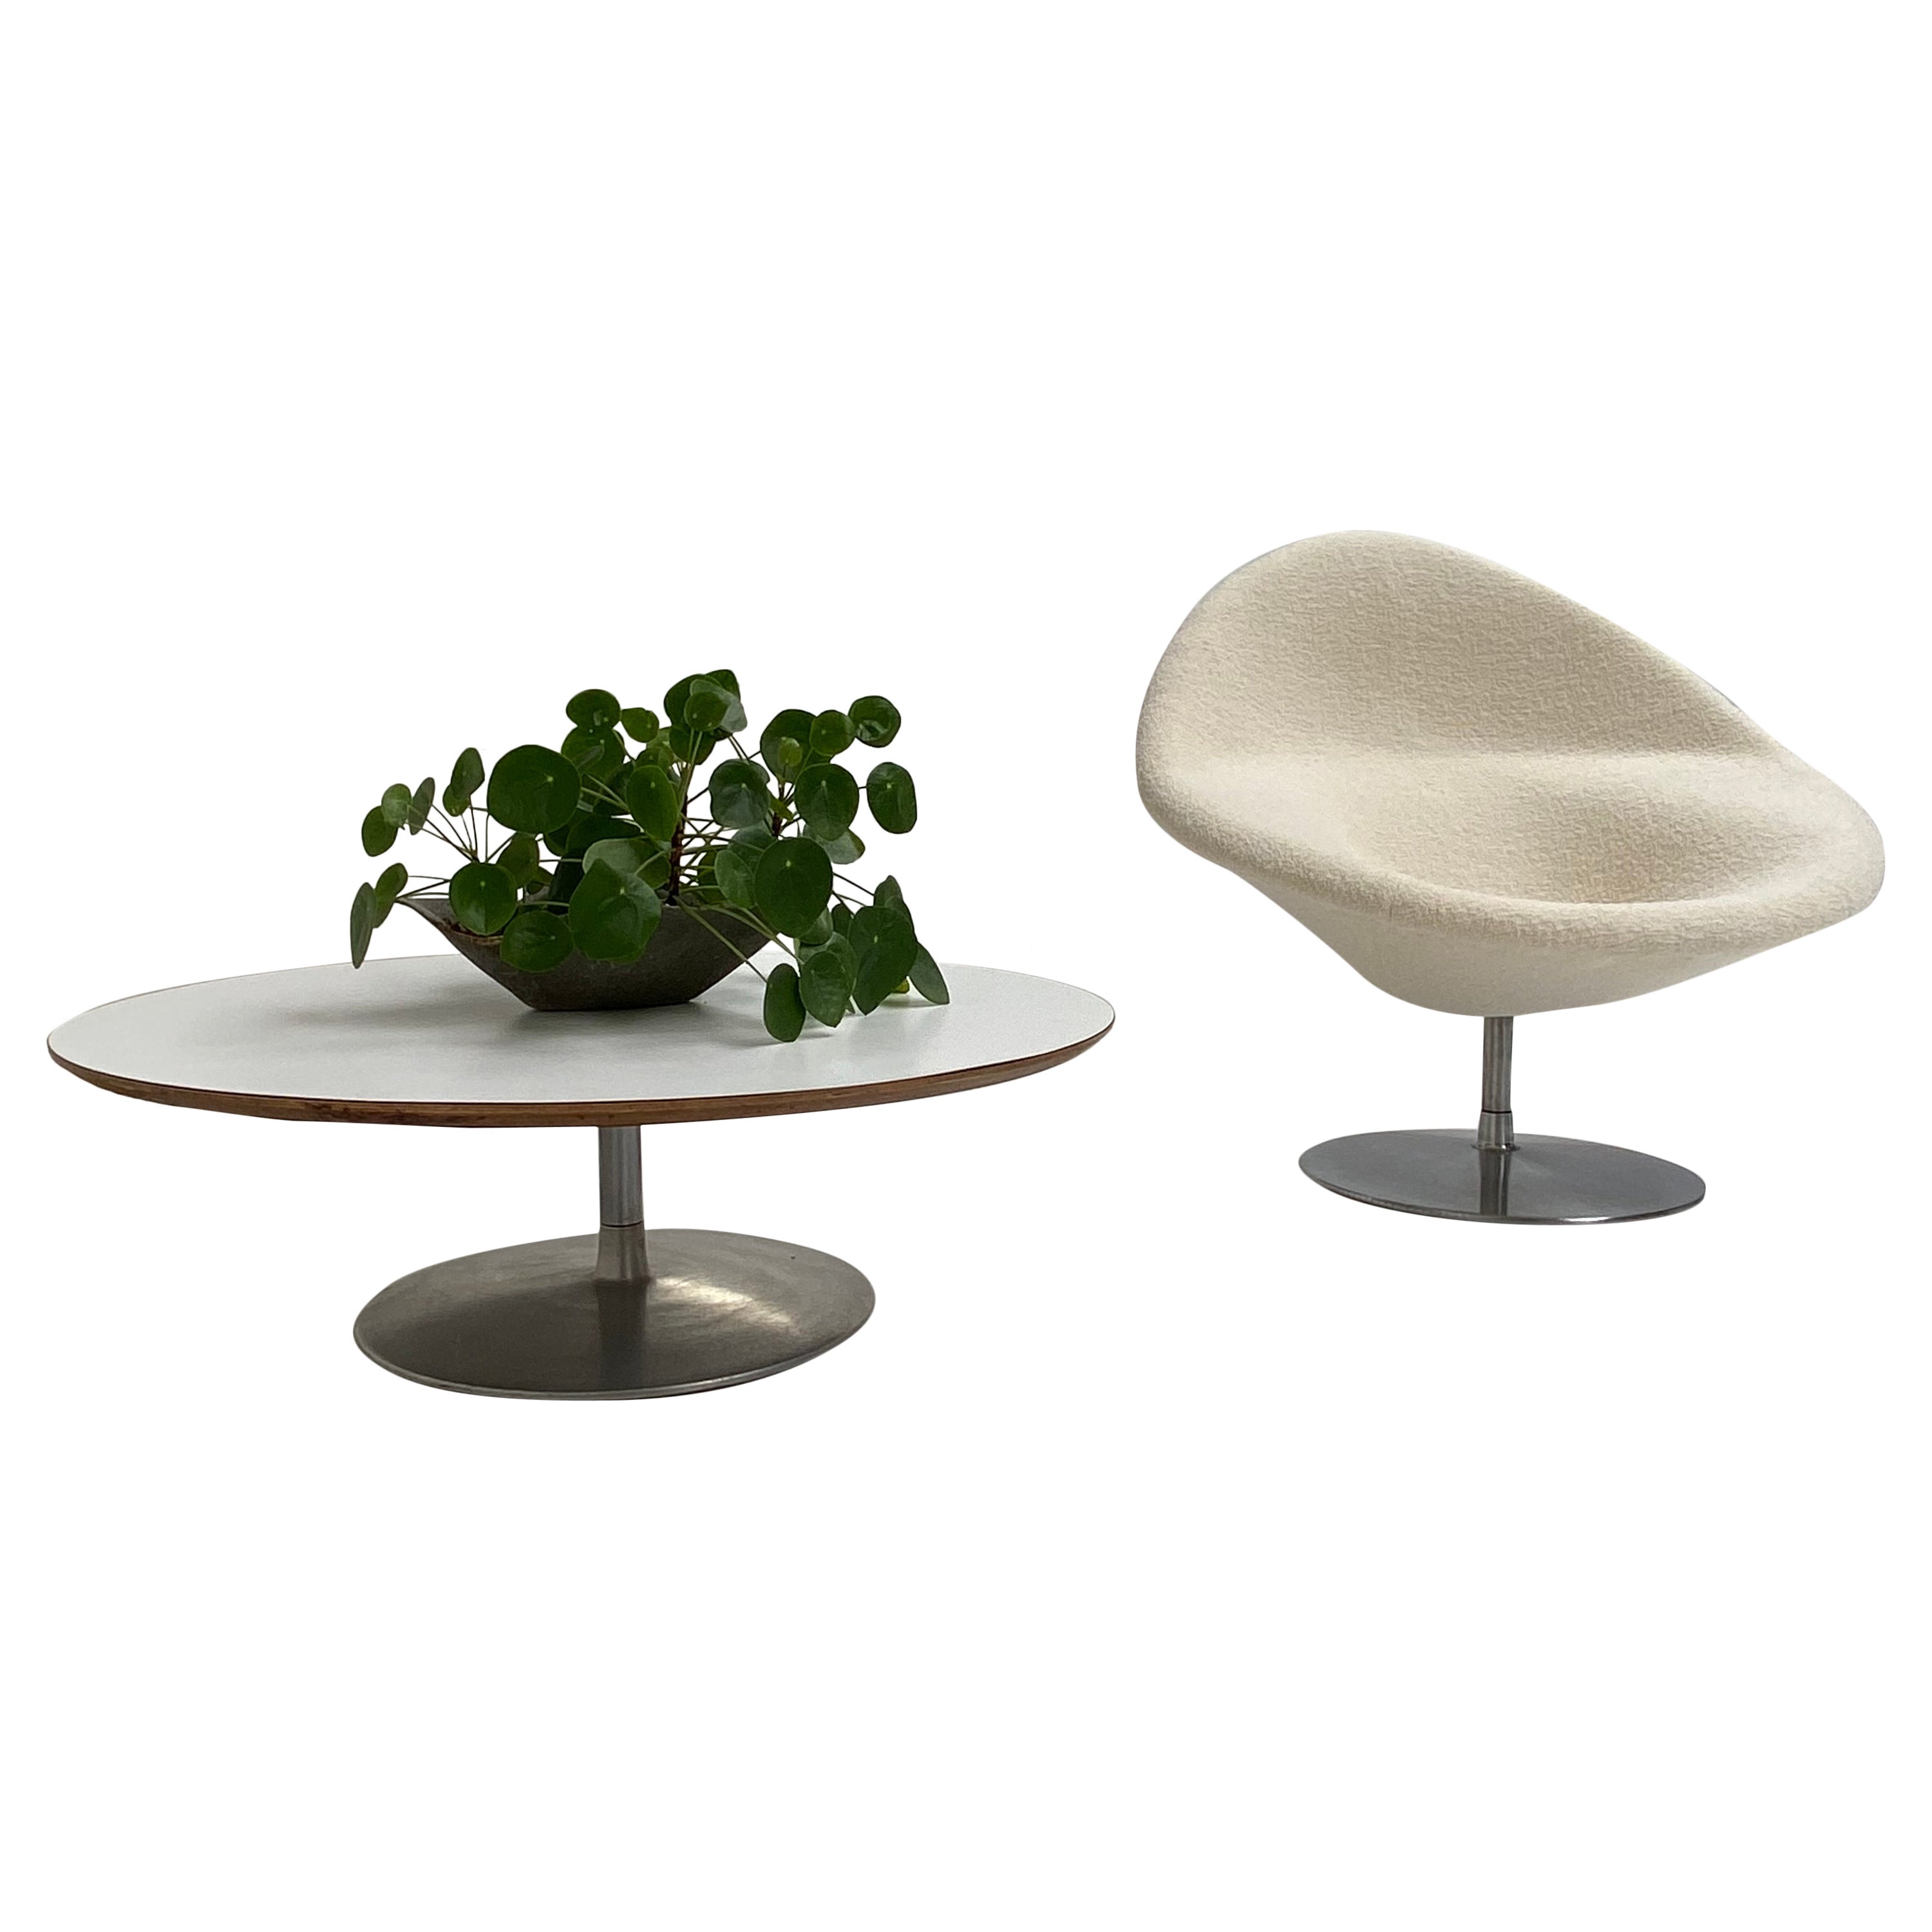 Pierre Paulin 'Globe' Lounge Chair + 'Circle' Coffee Table Artifort, 1959